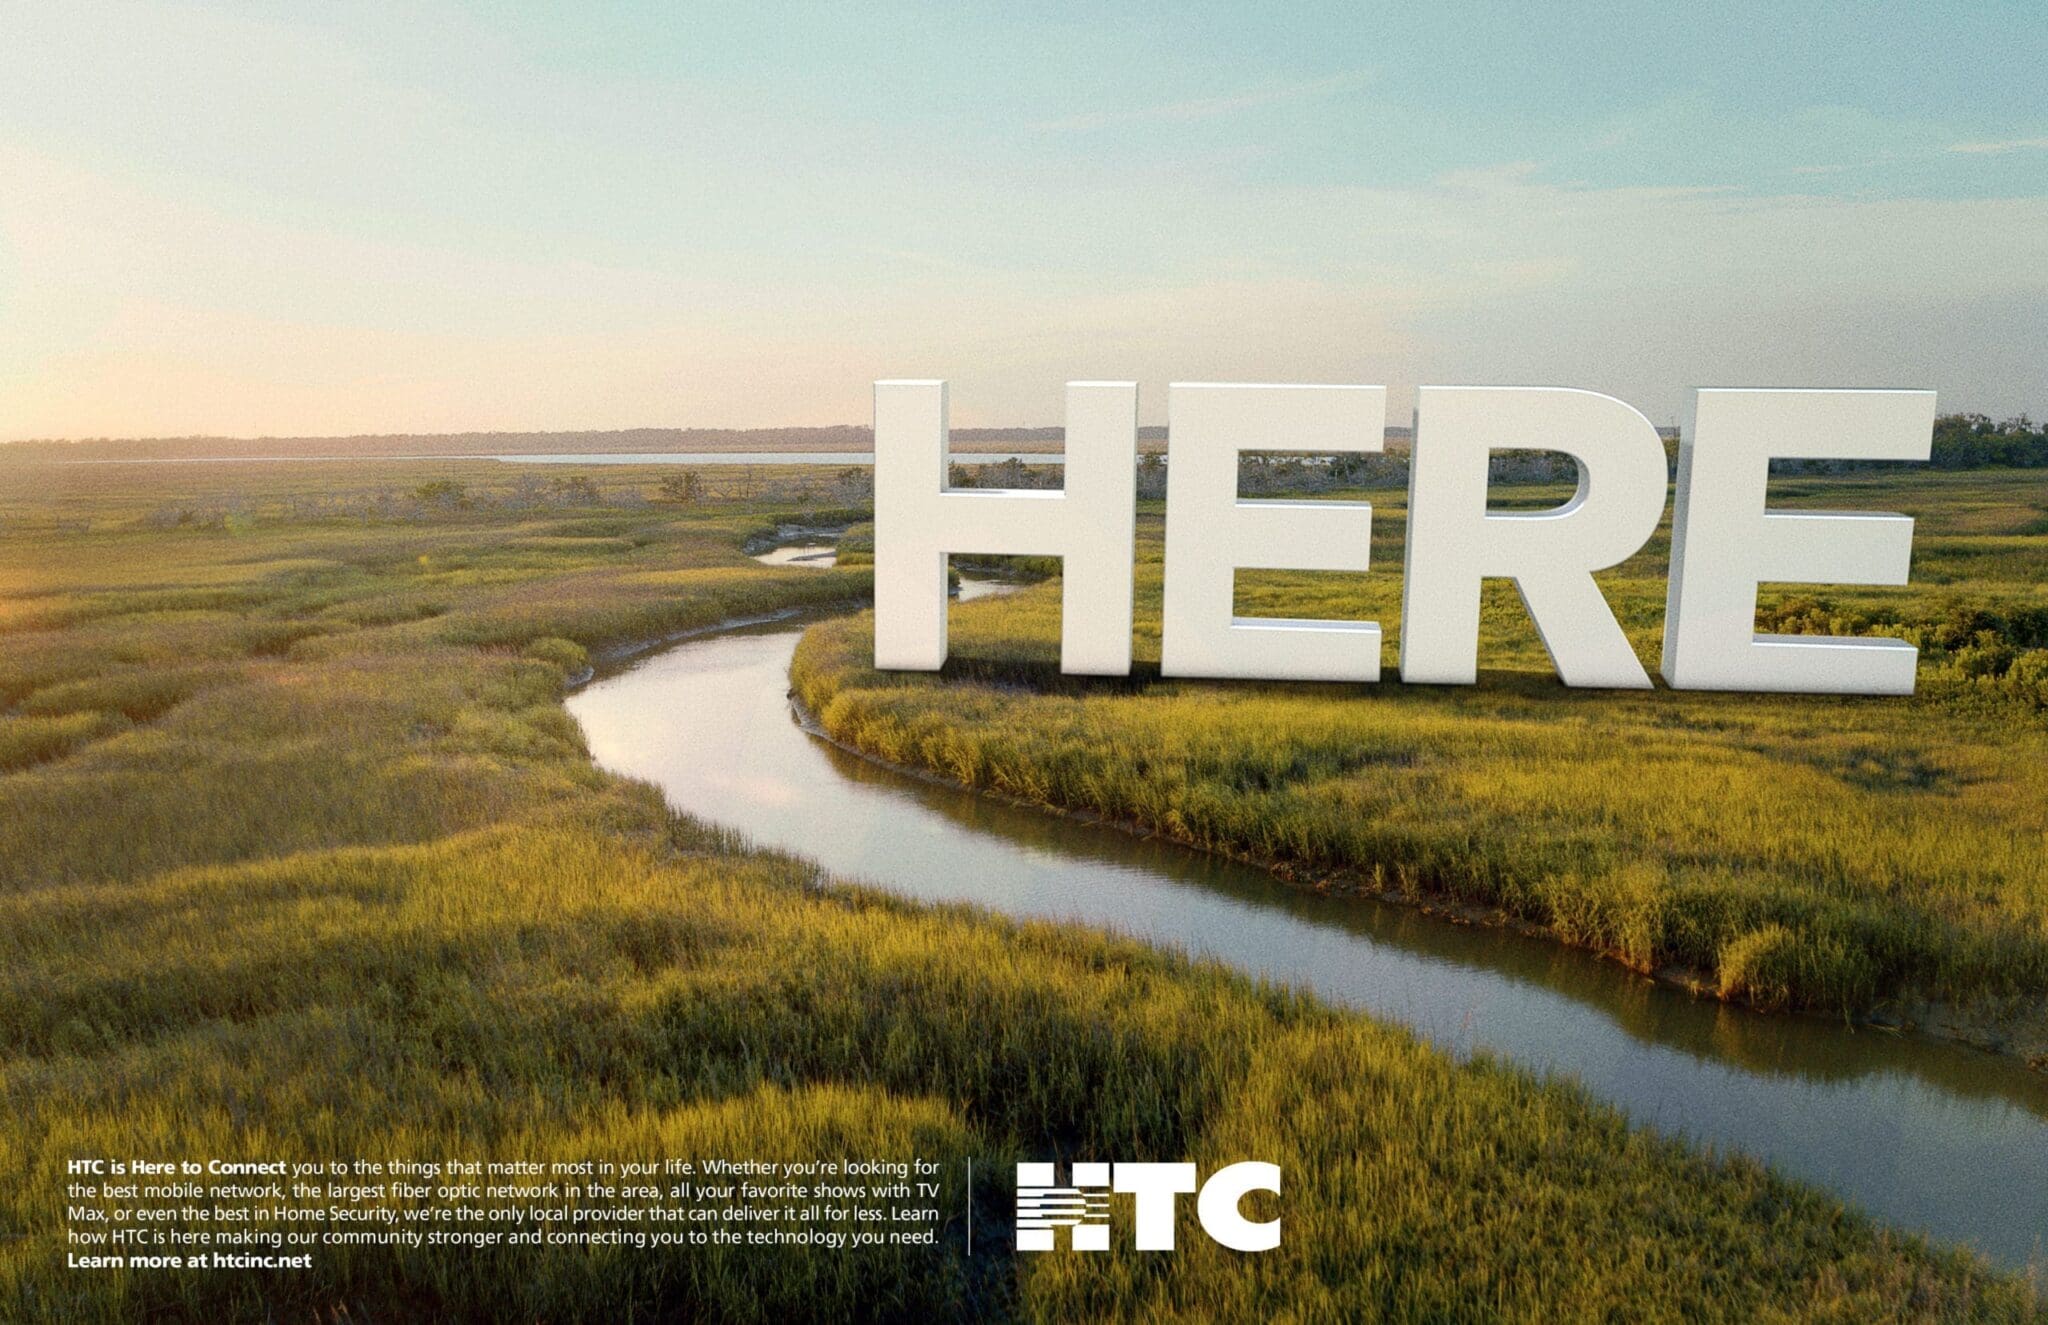 HTC marketing ad